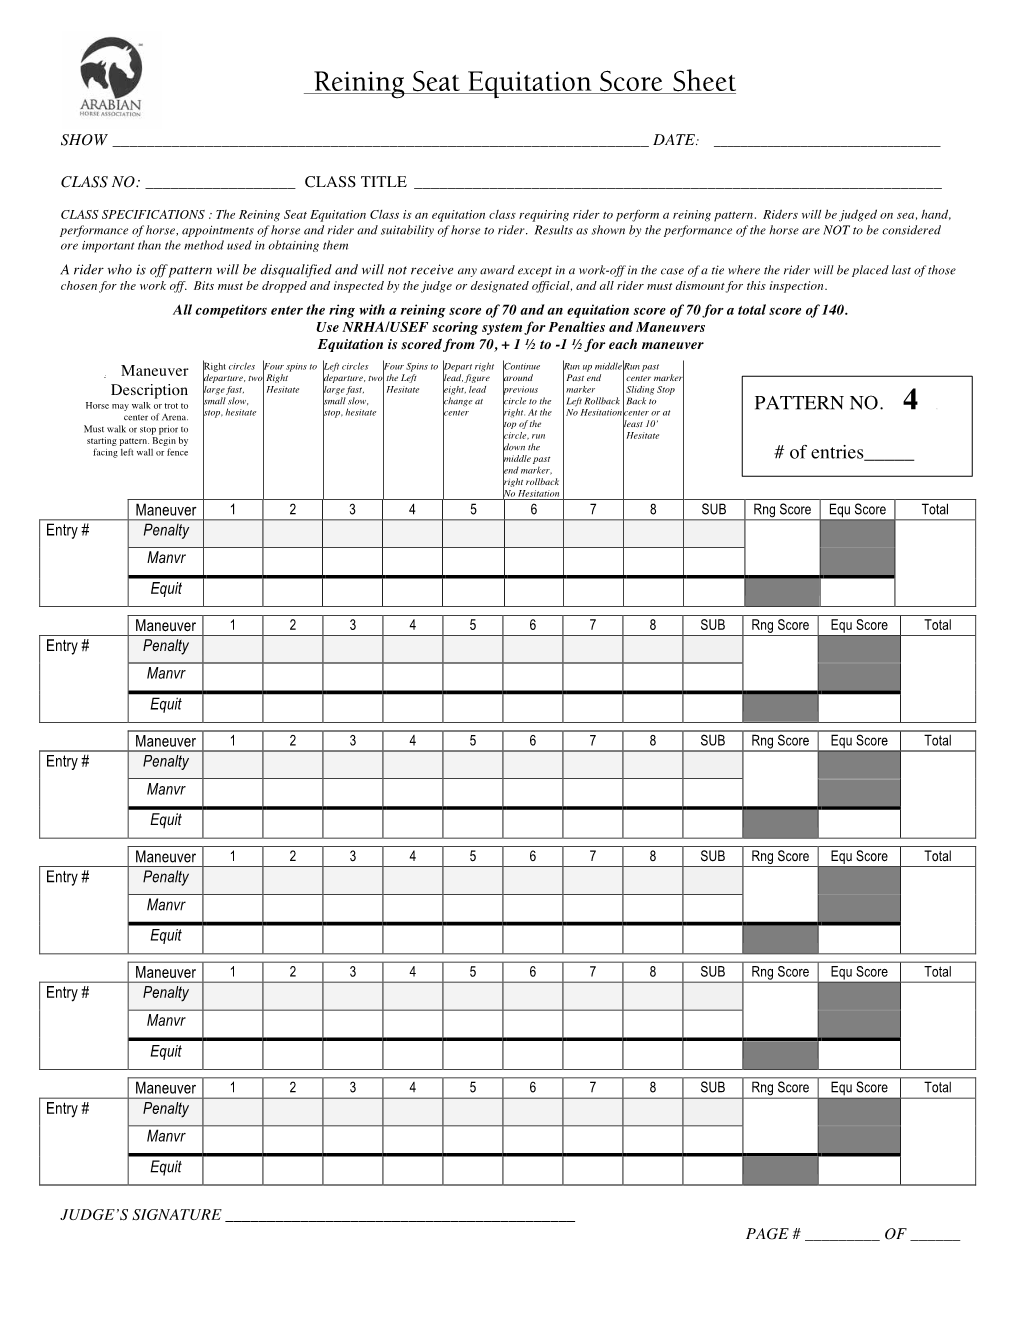 Reining Equitation Score Sheet